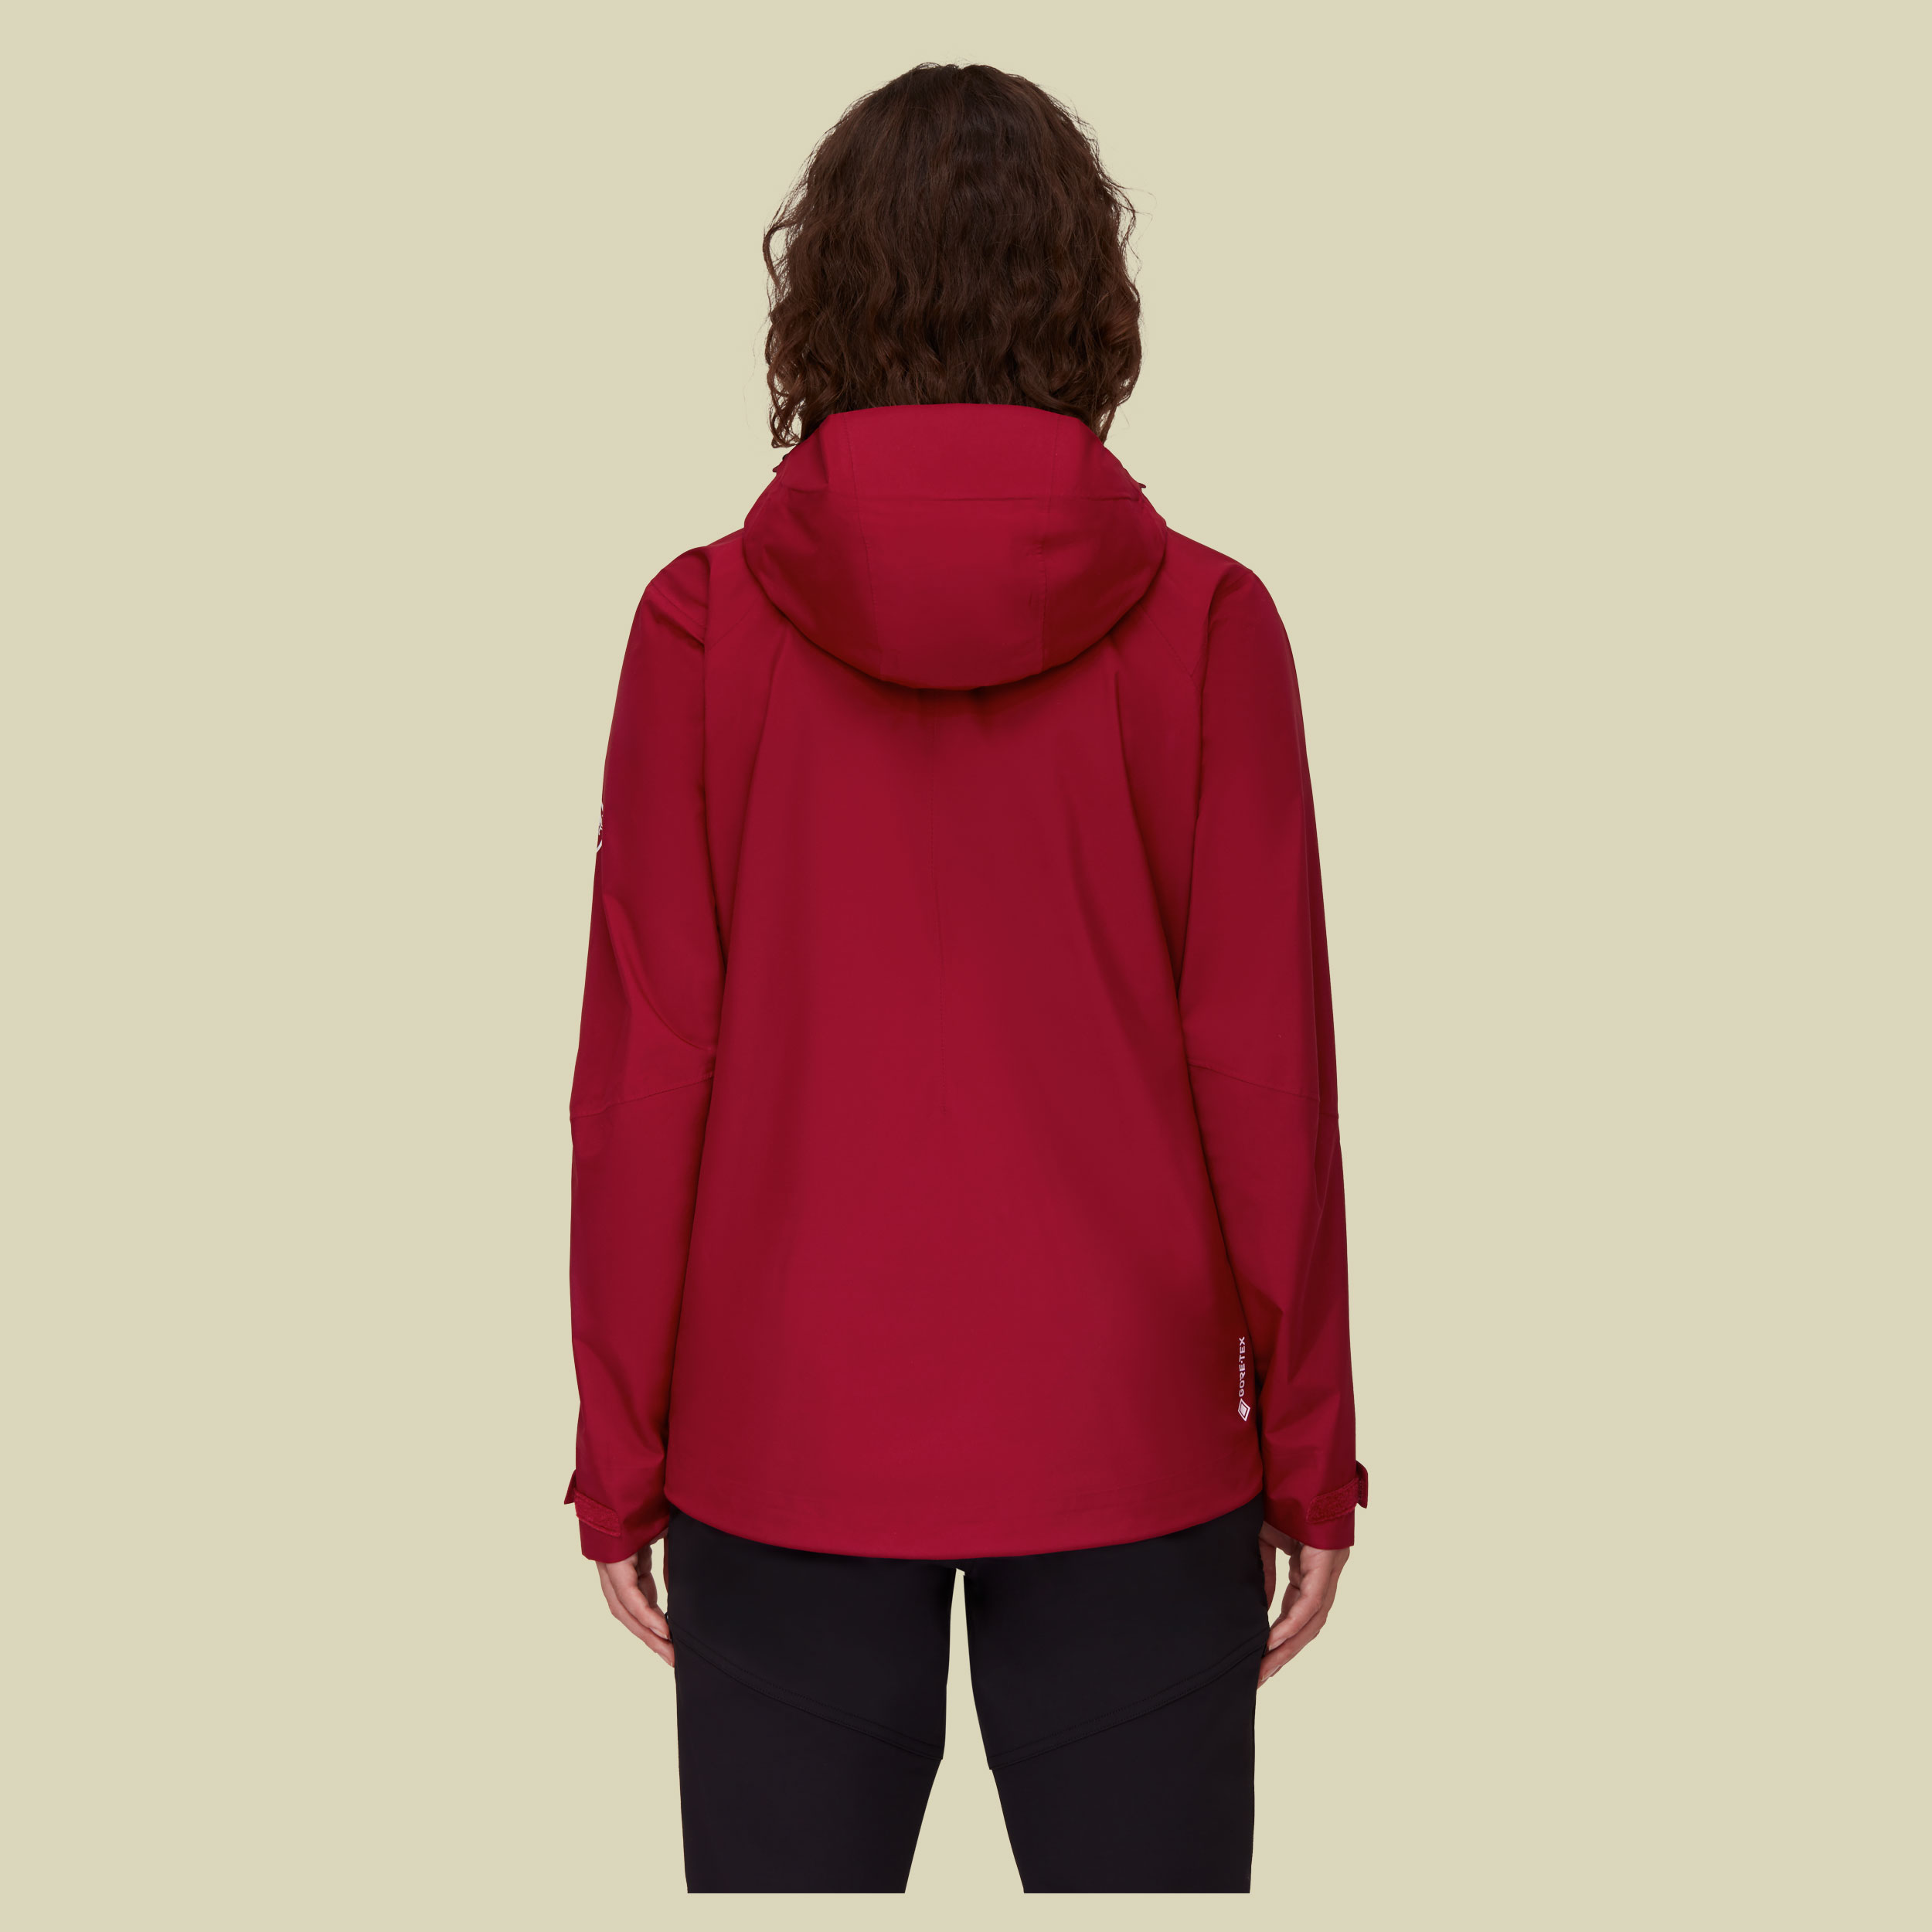 Convey Tour HS Hooded Jacket Women Größe XL Farbe blood red-black